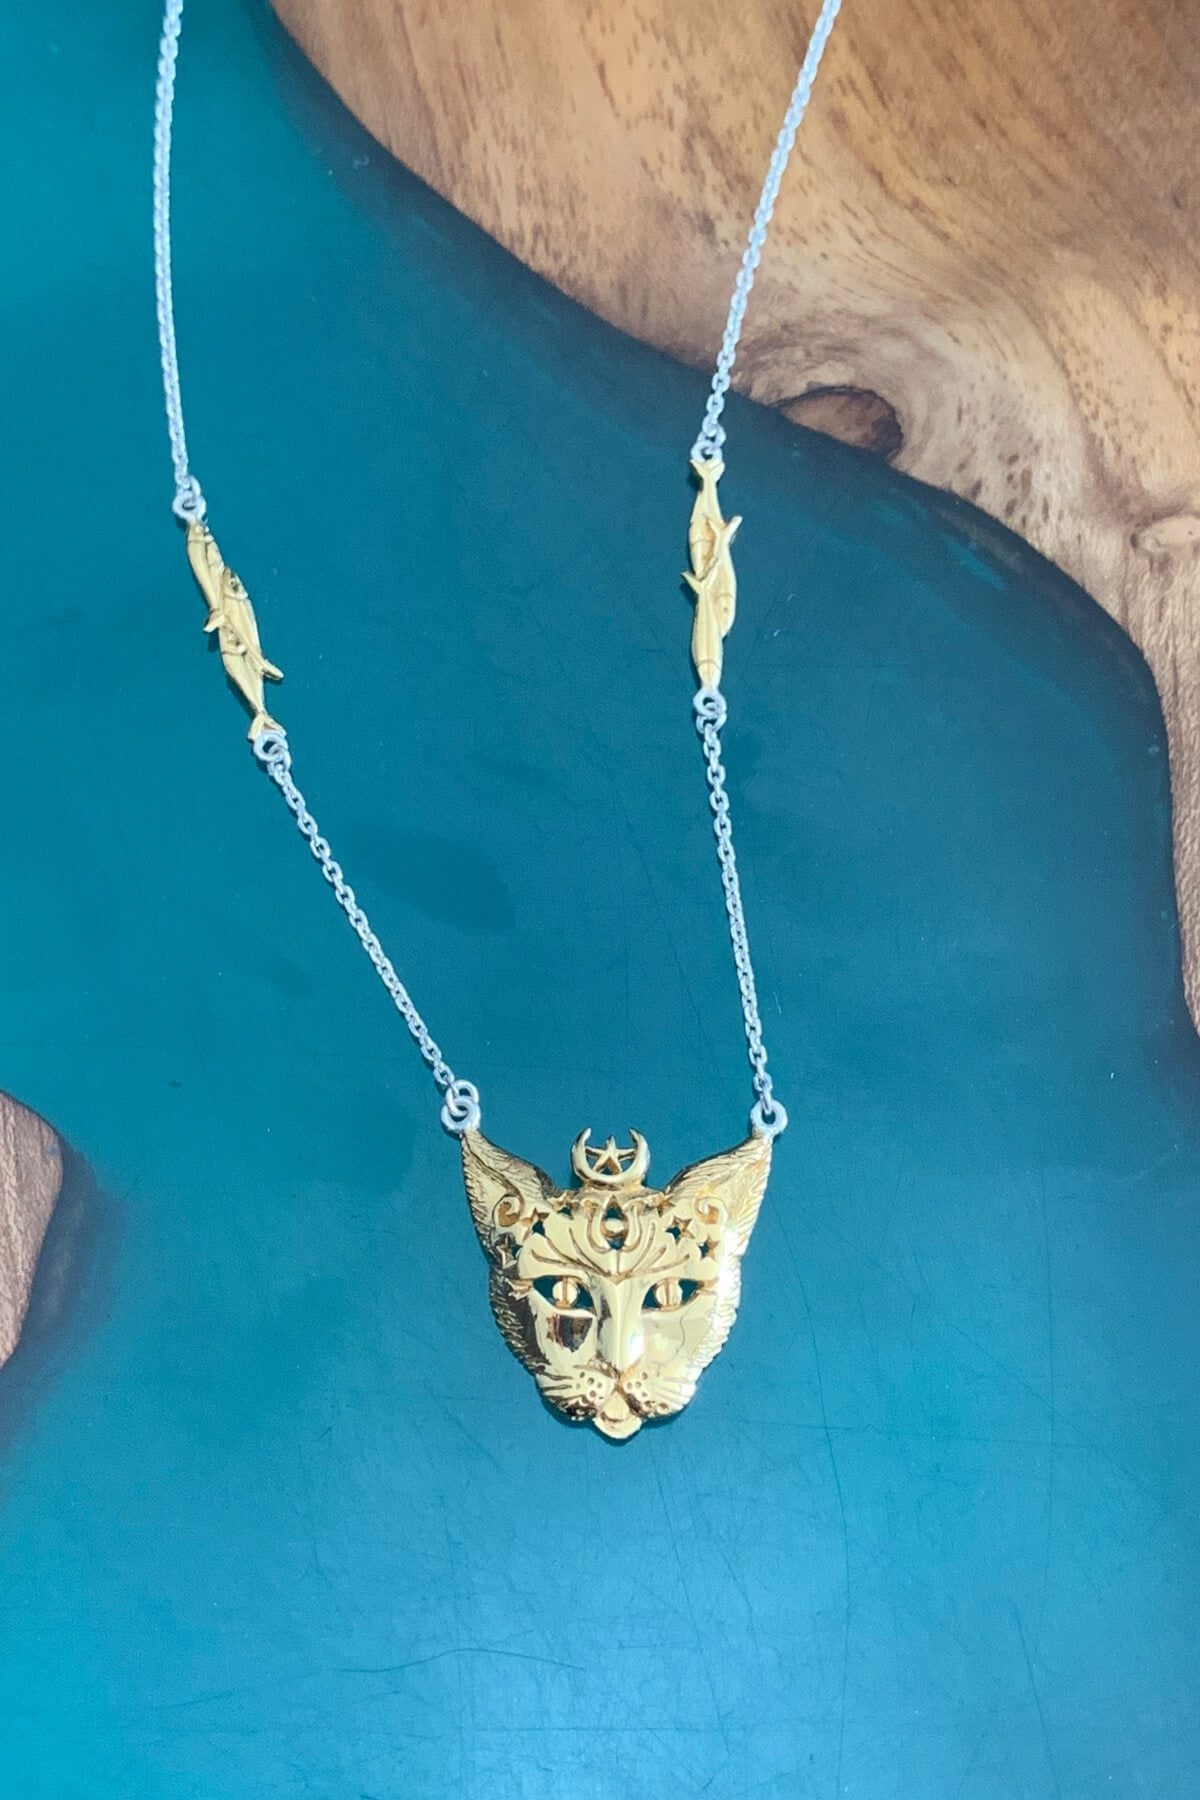 Bastet Goddess necklace. Silver